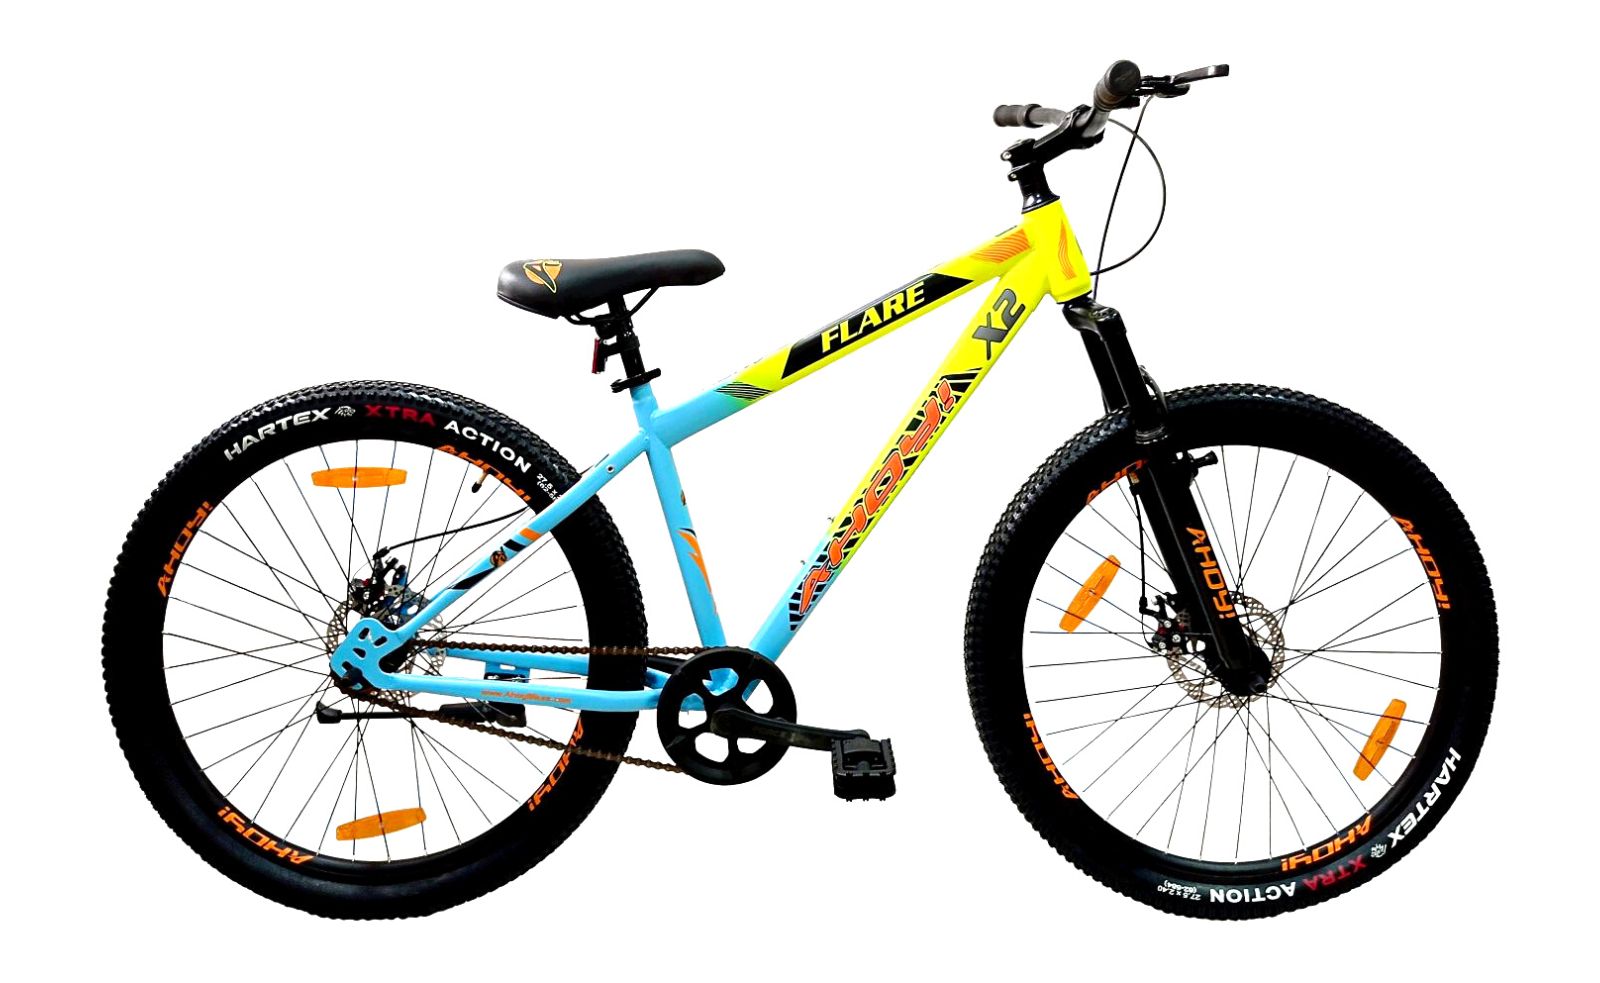 Flare Non Gear Bike 27.5T | Buy Blue Non Gear Cycle for Men